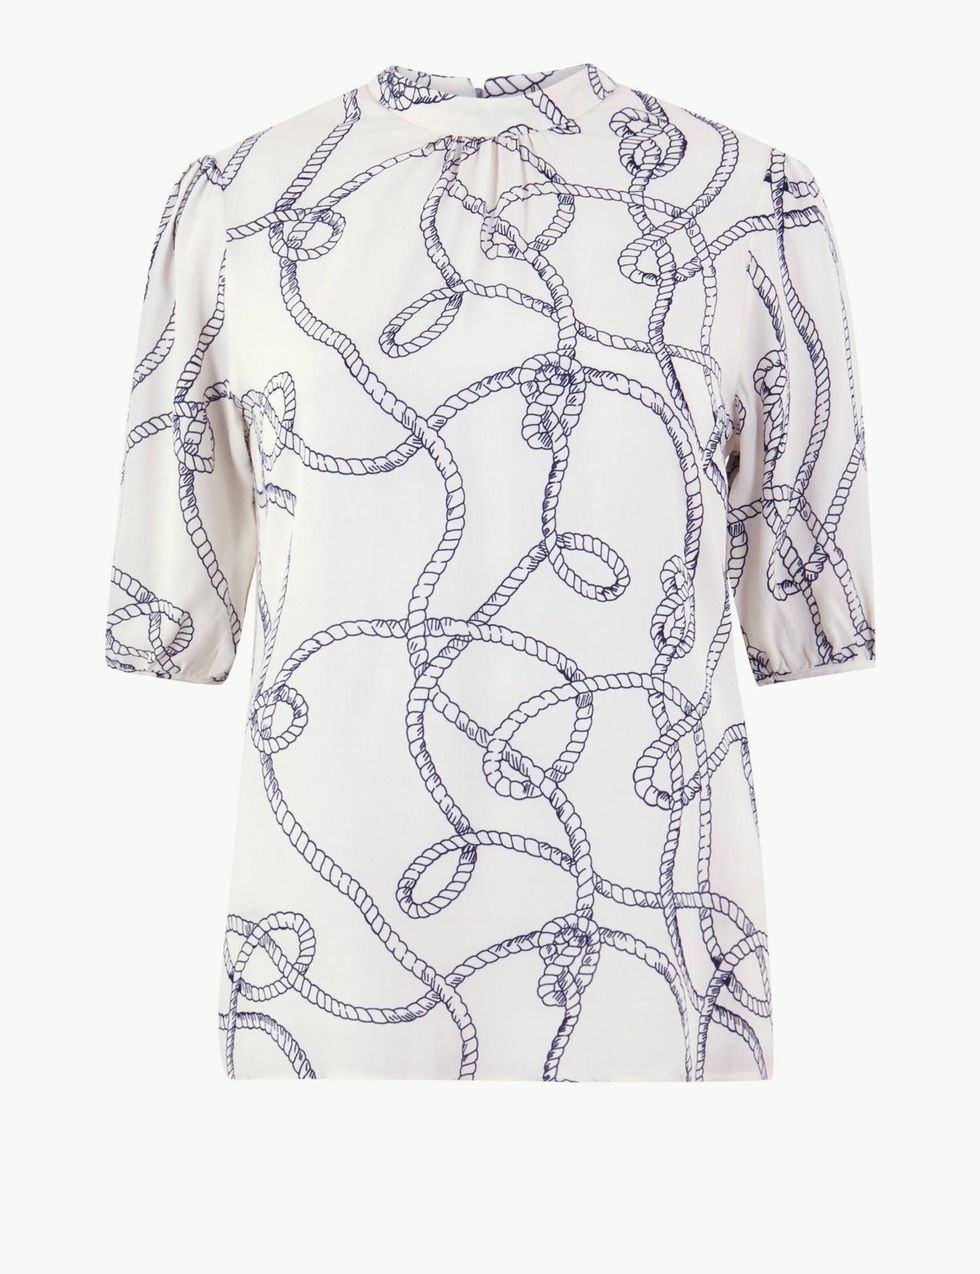 We're loving Ruth Langsford's on-trend £19.99 rope-print Zara shirt